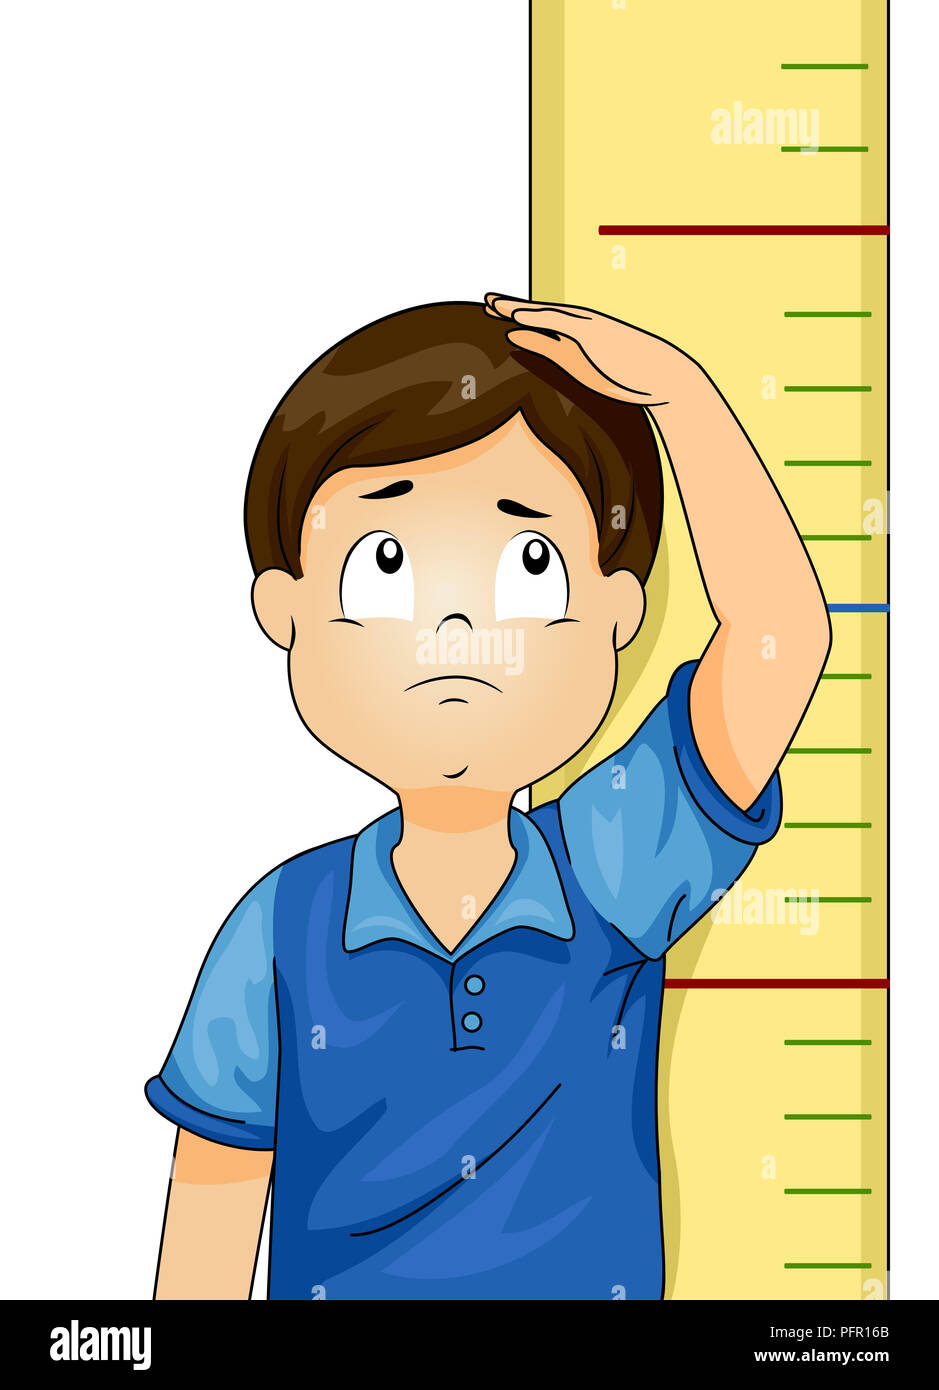 Child Height Measurement Chart